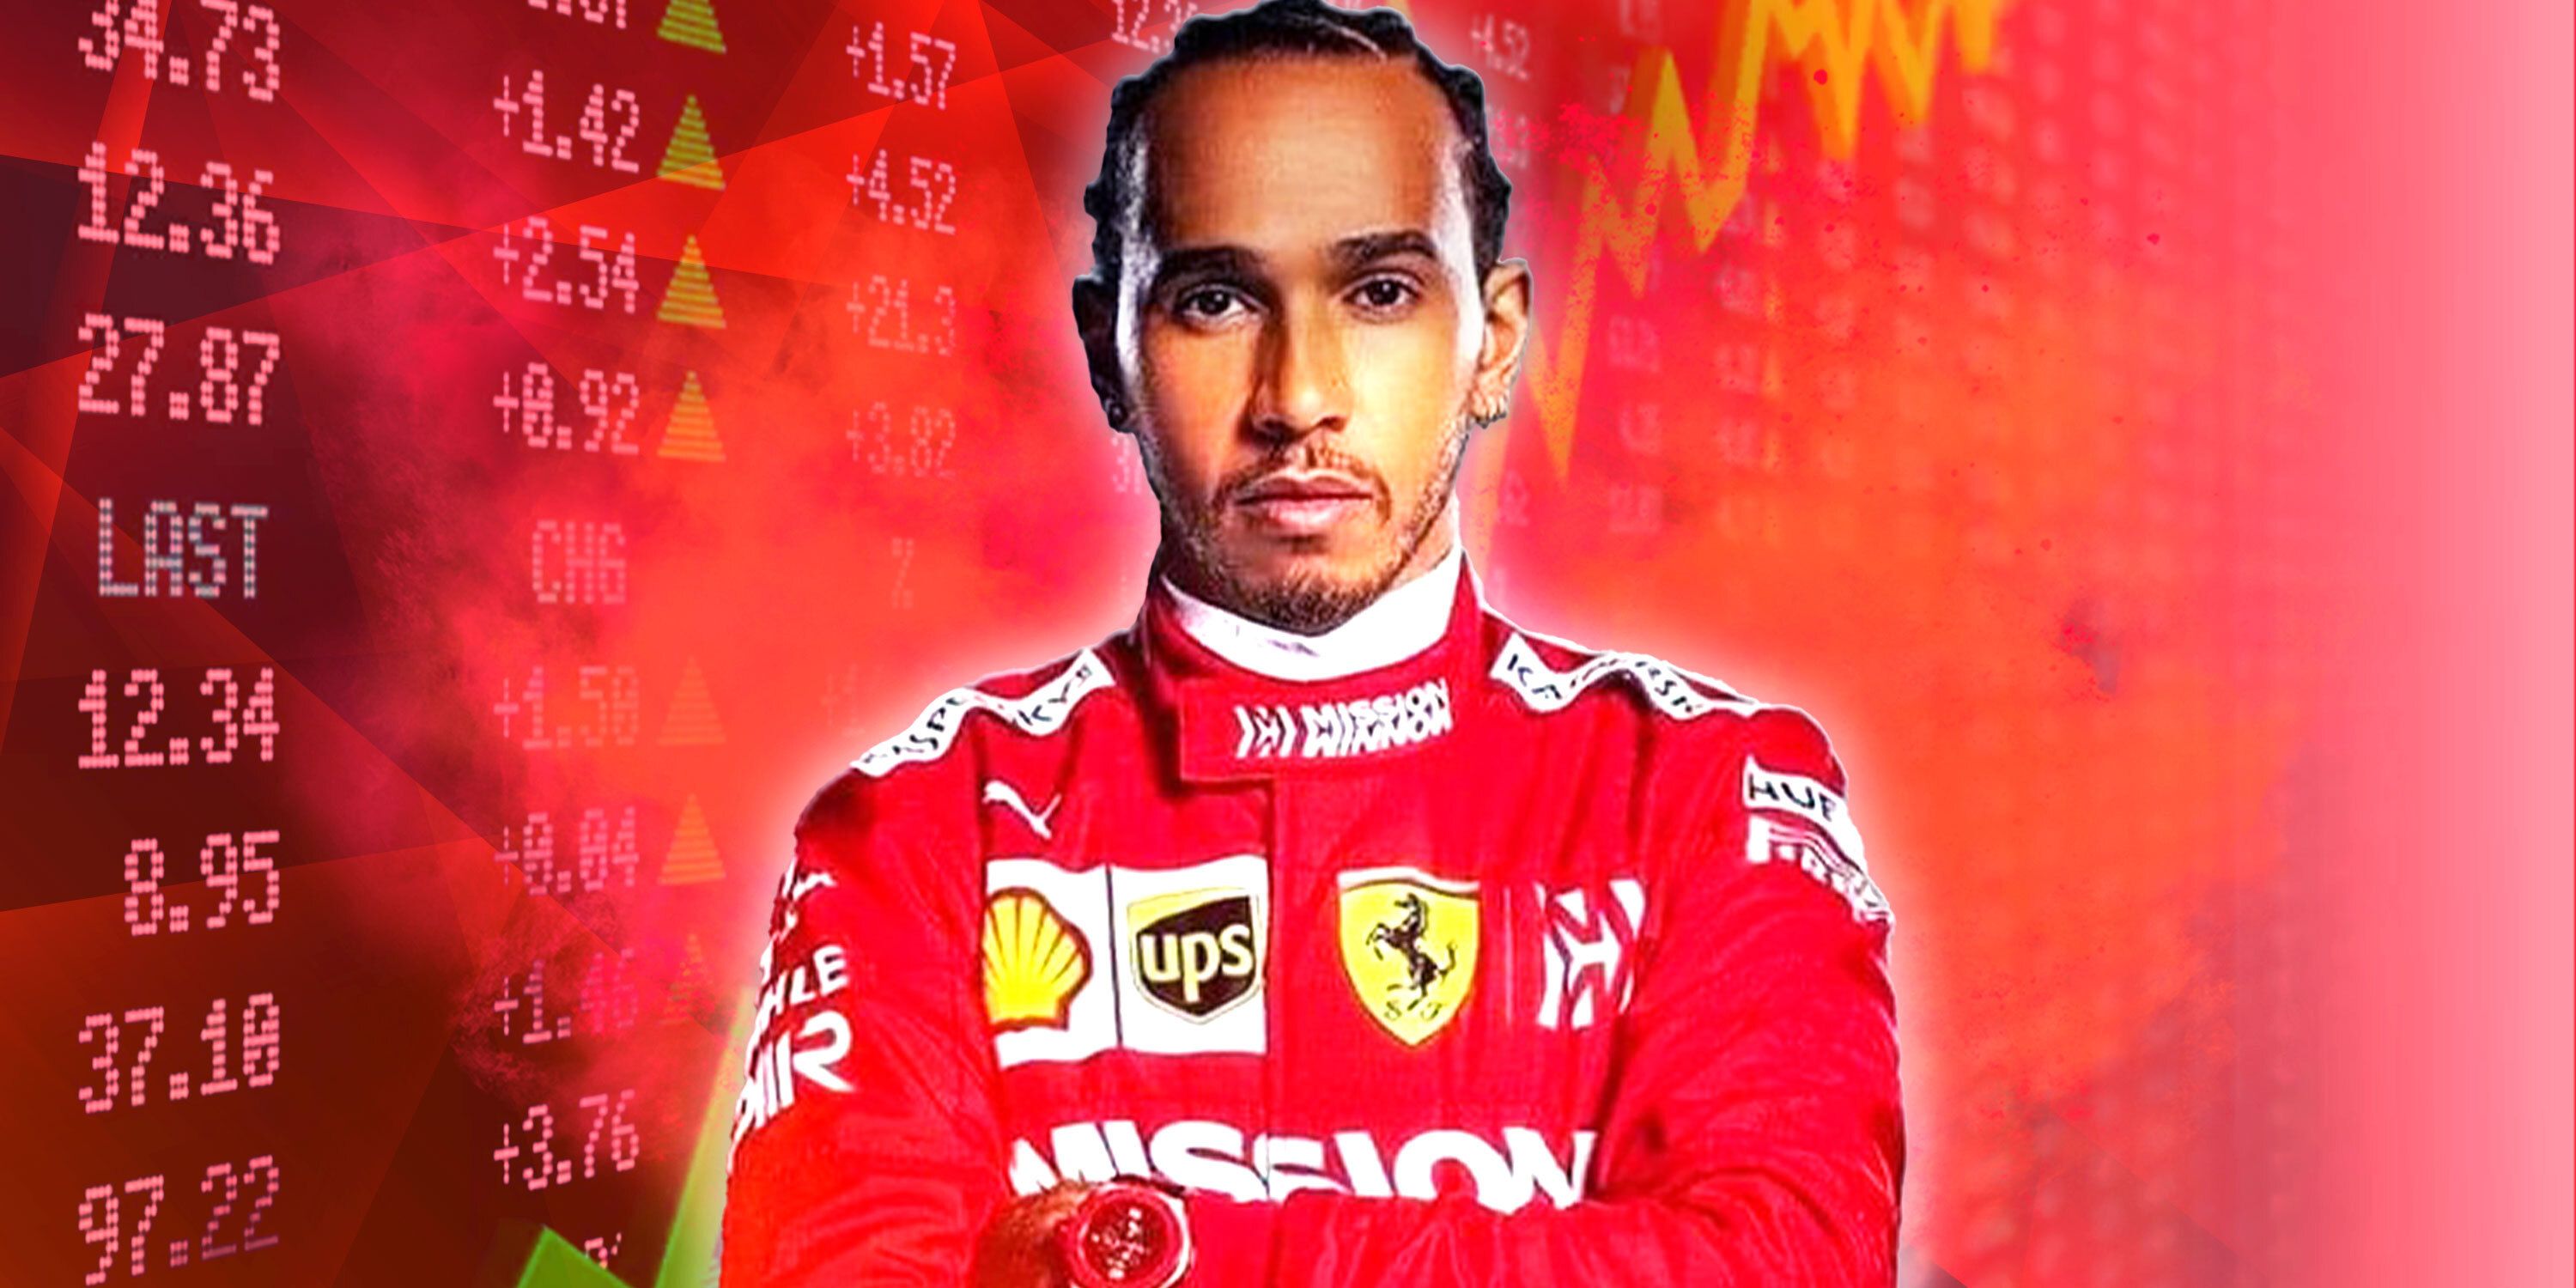 Lewis-Hamilton-announcement-sees-Ferrari-value-skyrocket-by-over-£3BILLION